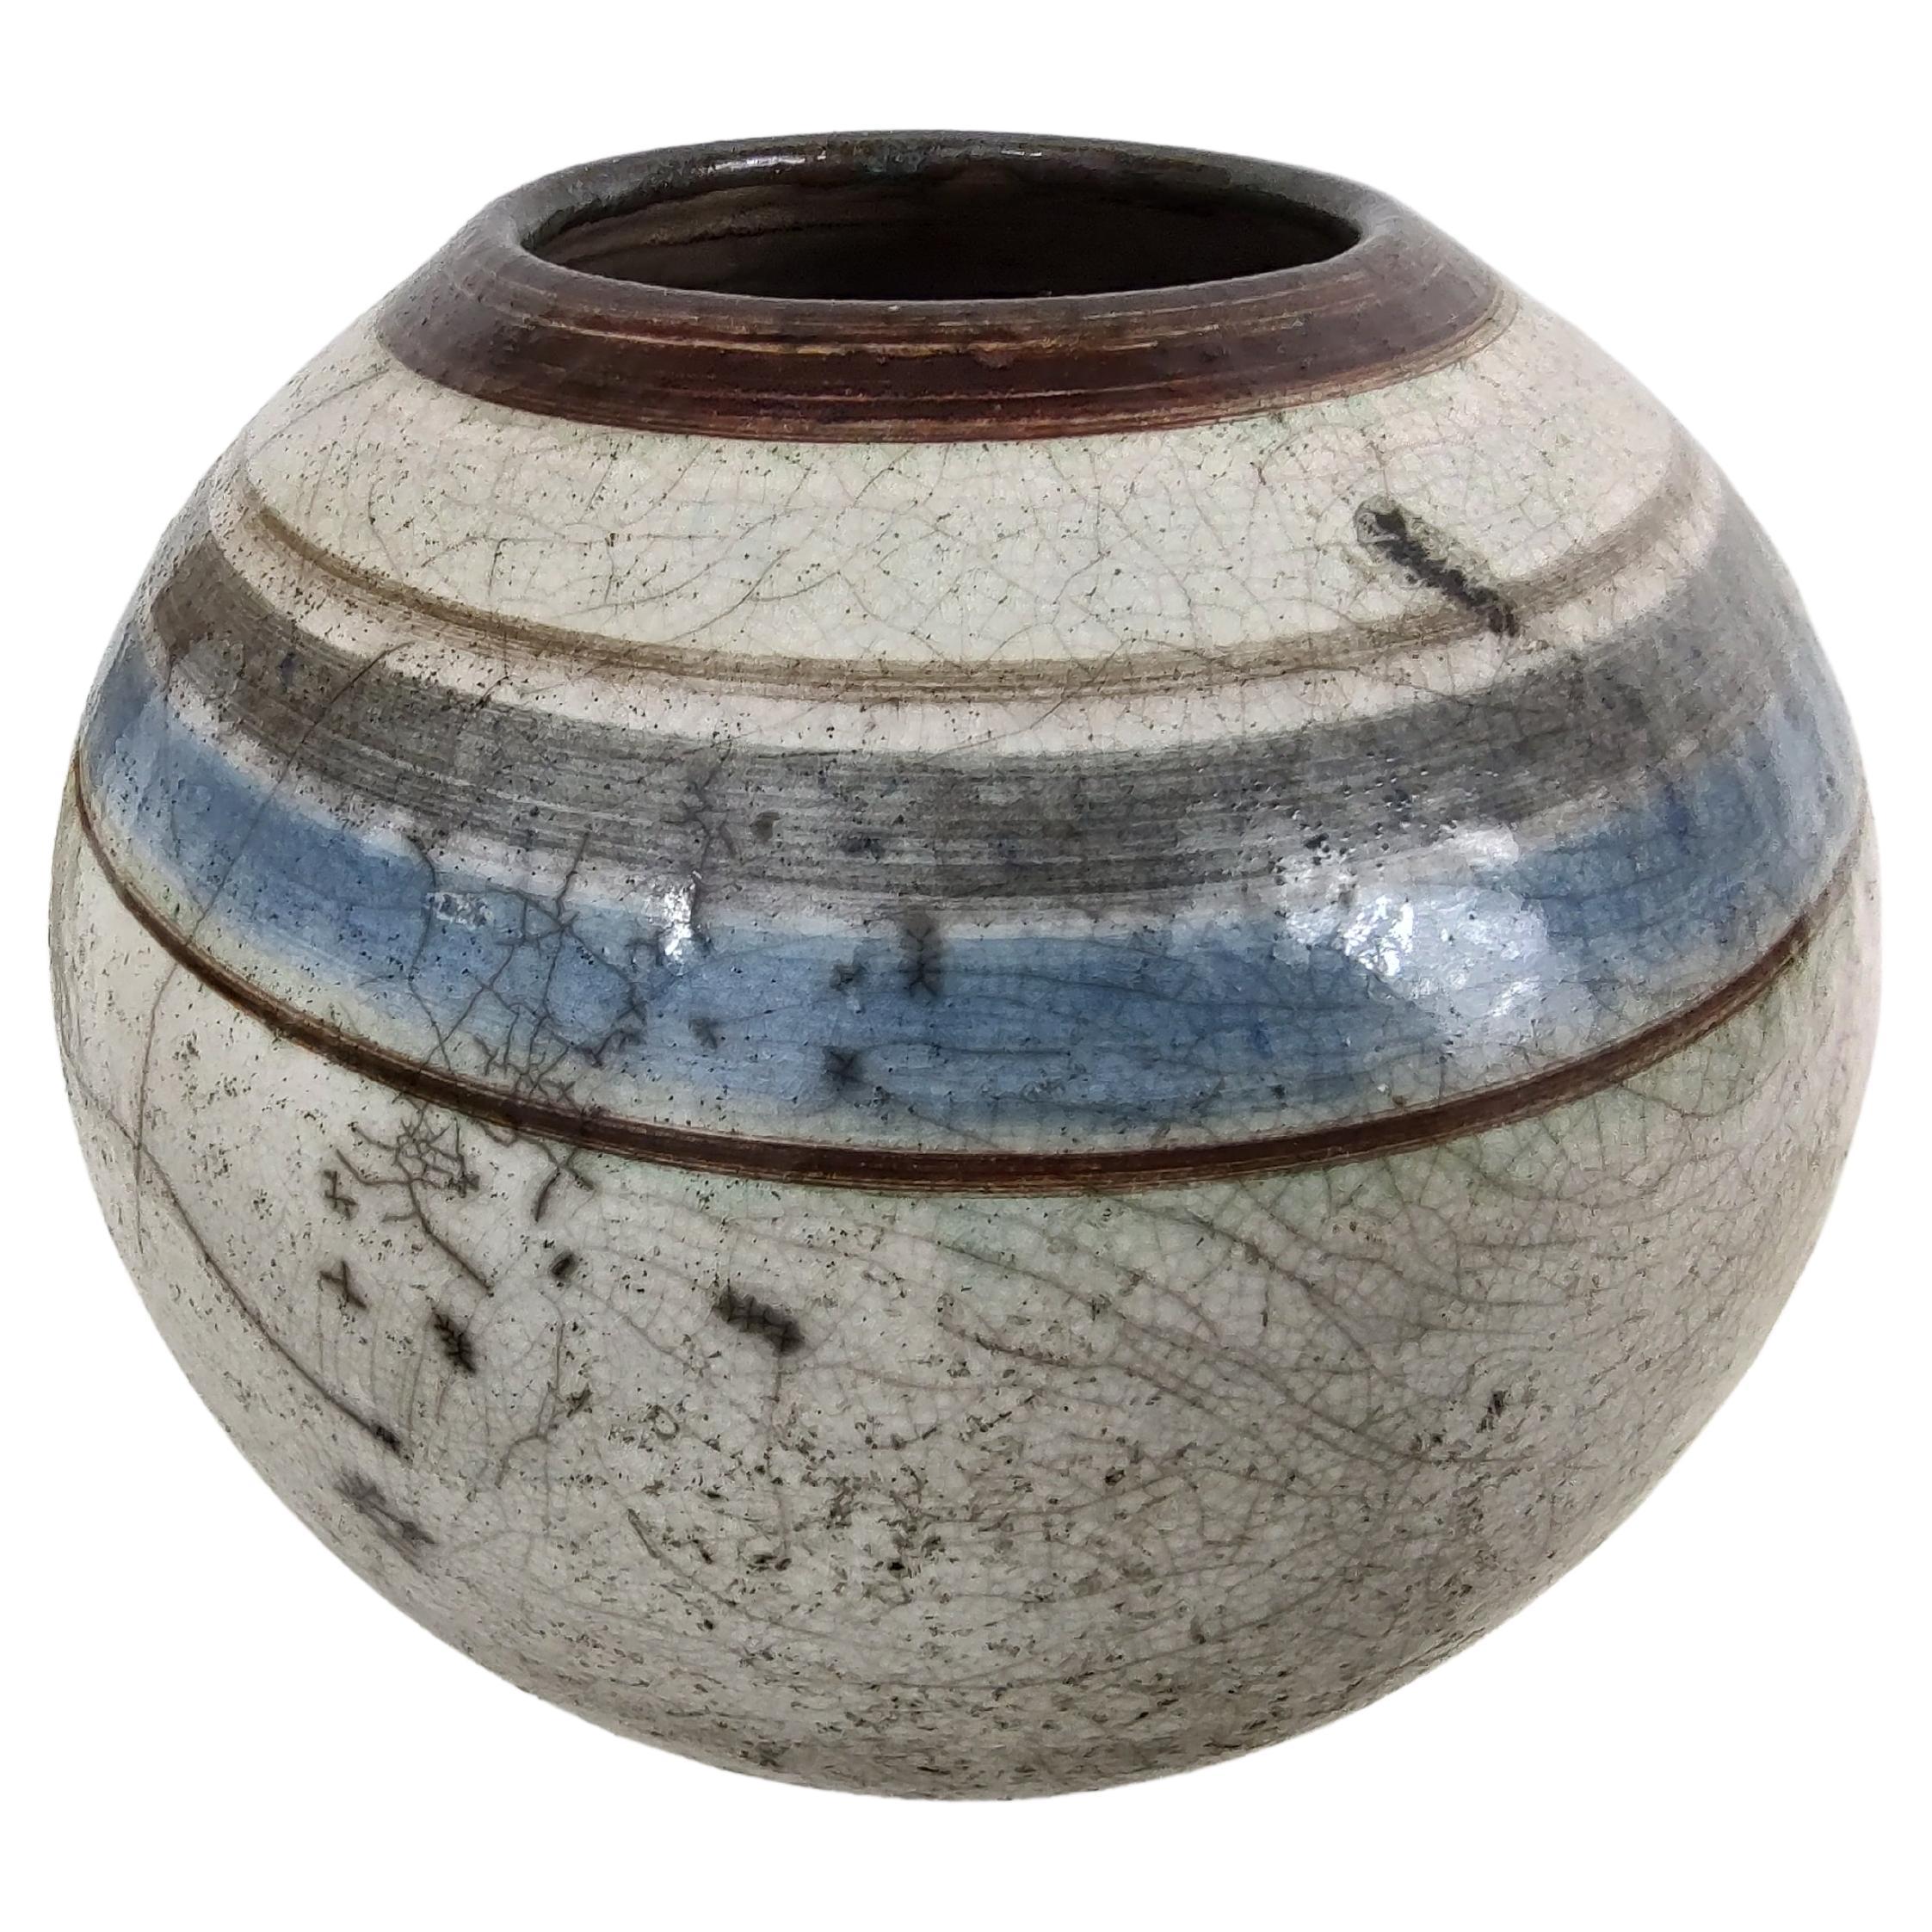 Hand Crafted Mid-Century Modern Vase, Pot by Artist Nancee Meeker